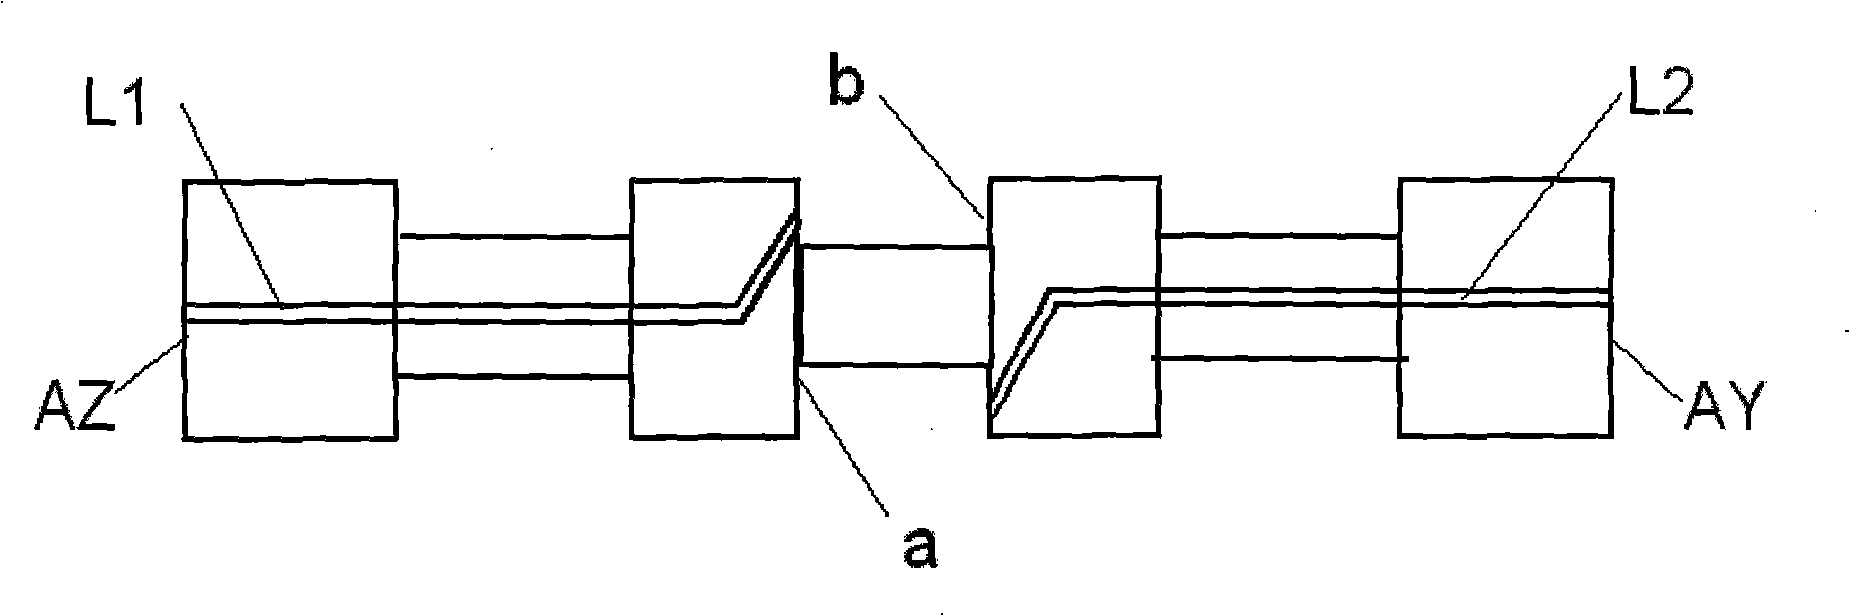 Hydraulic sliding valve mechanism containing force balance flow path